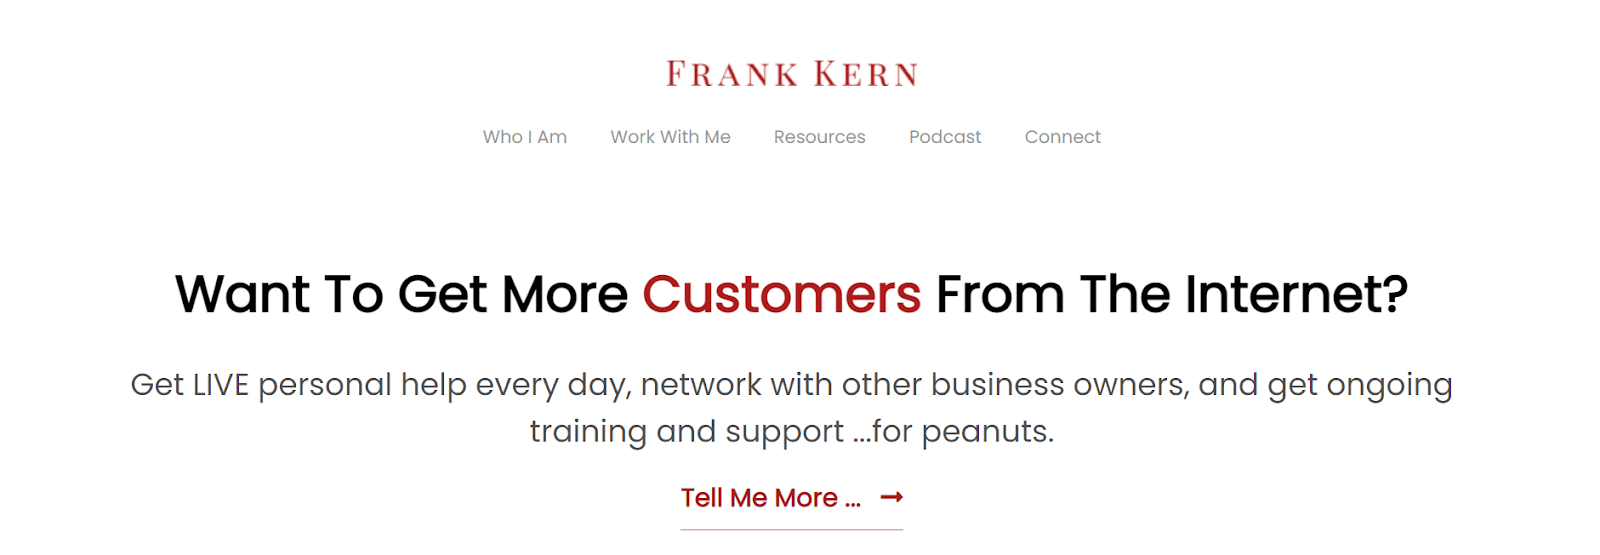 Frank Kern's home page copywriting